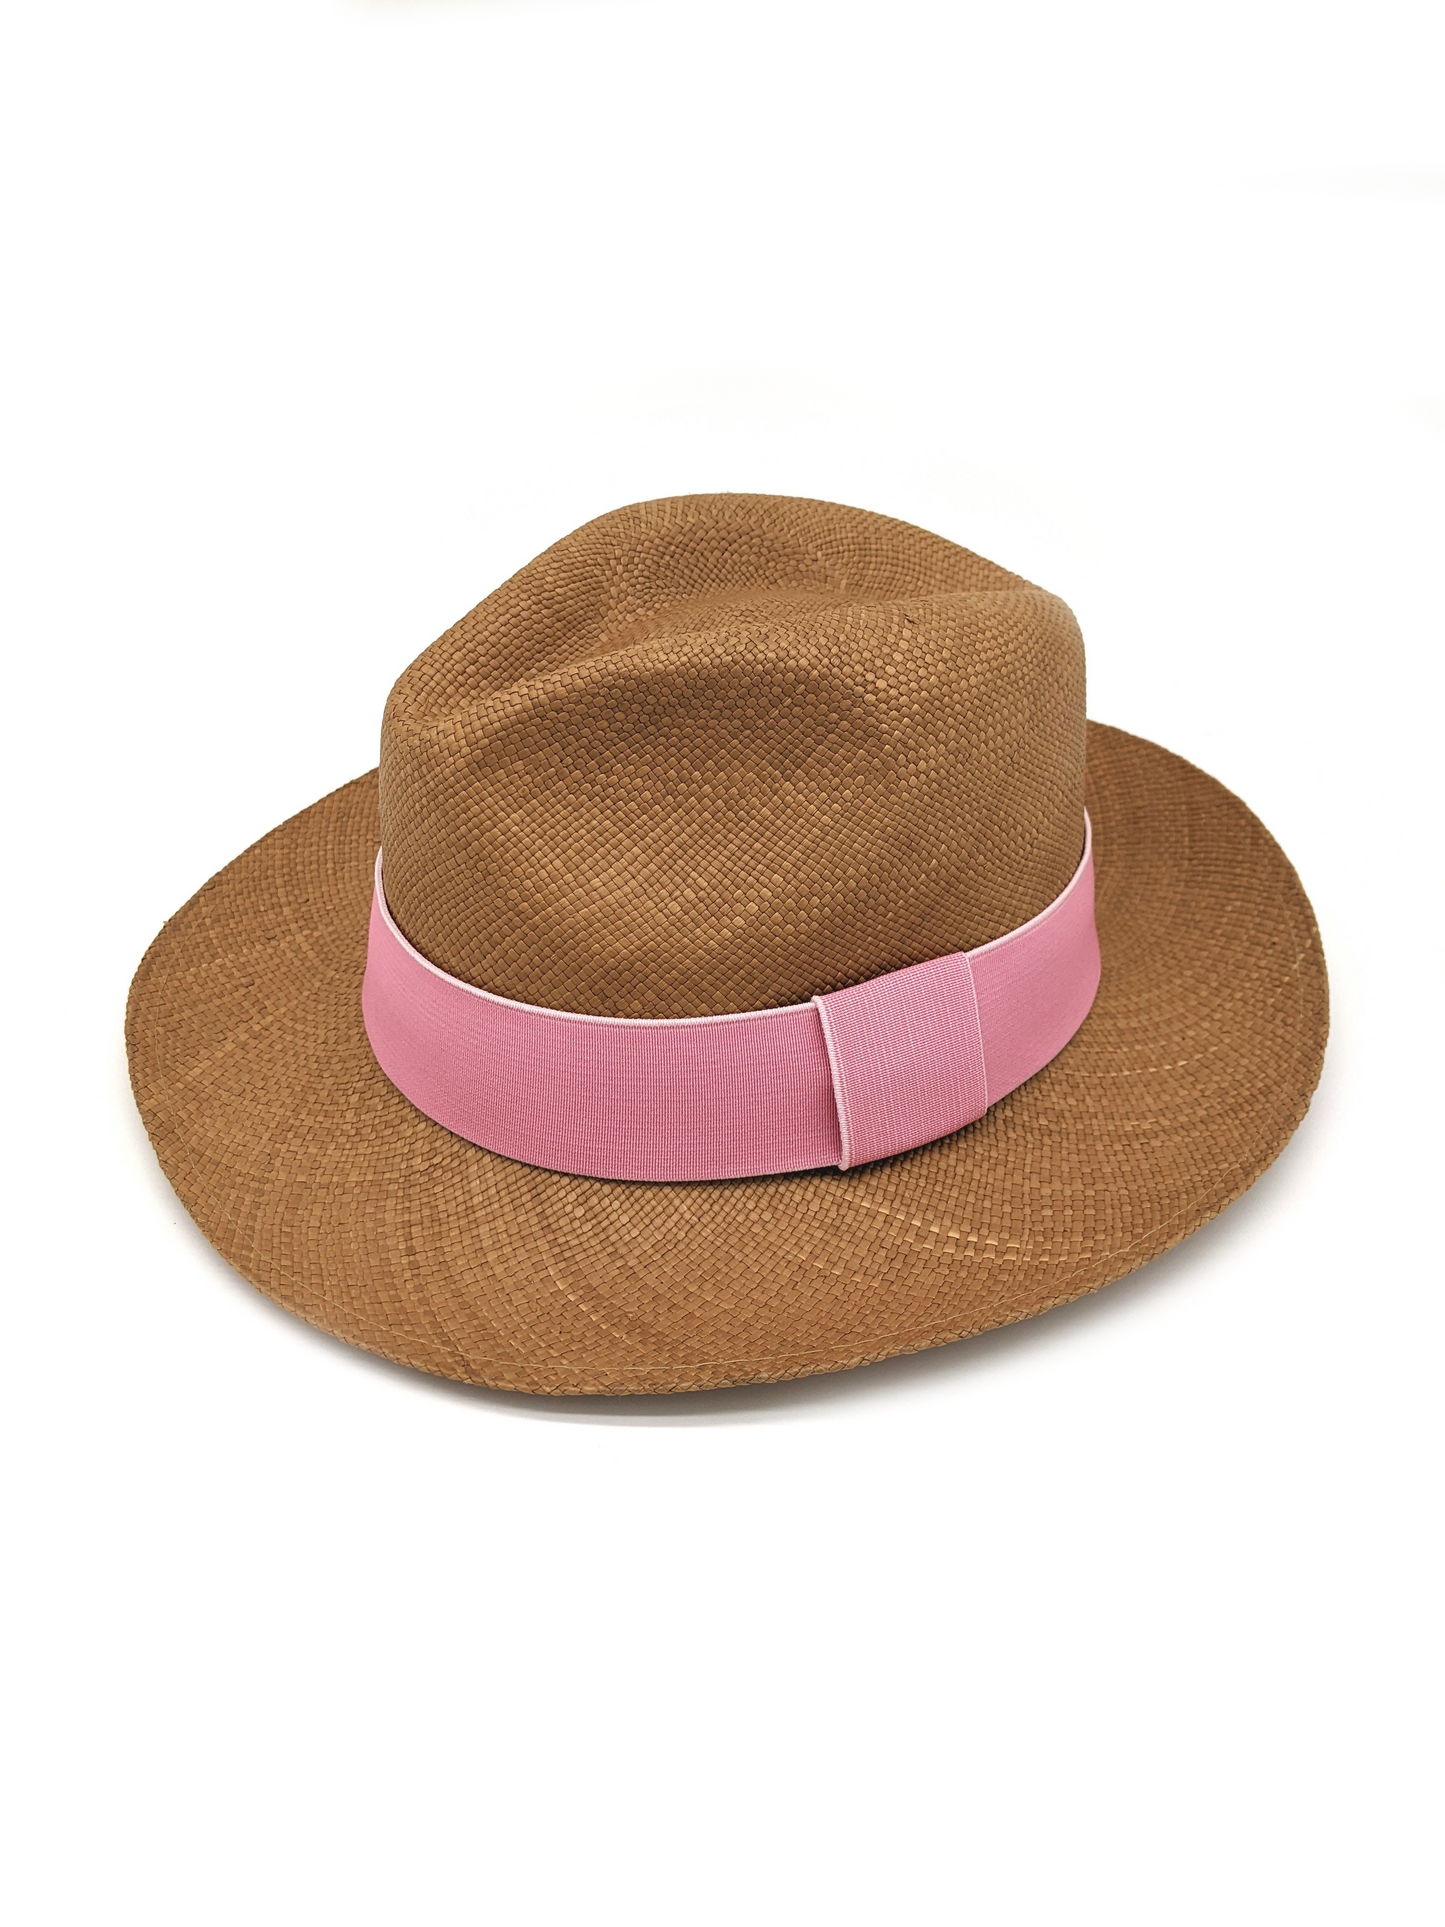 Brown Panama with Light Pink Band